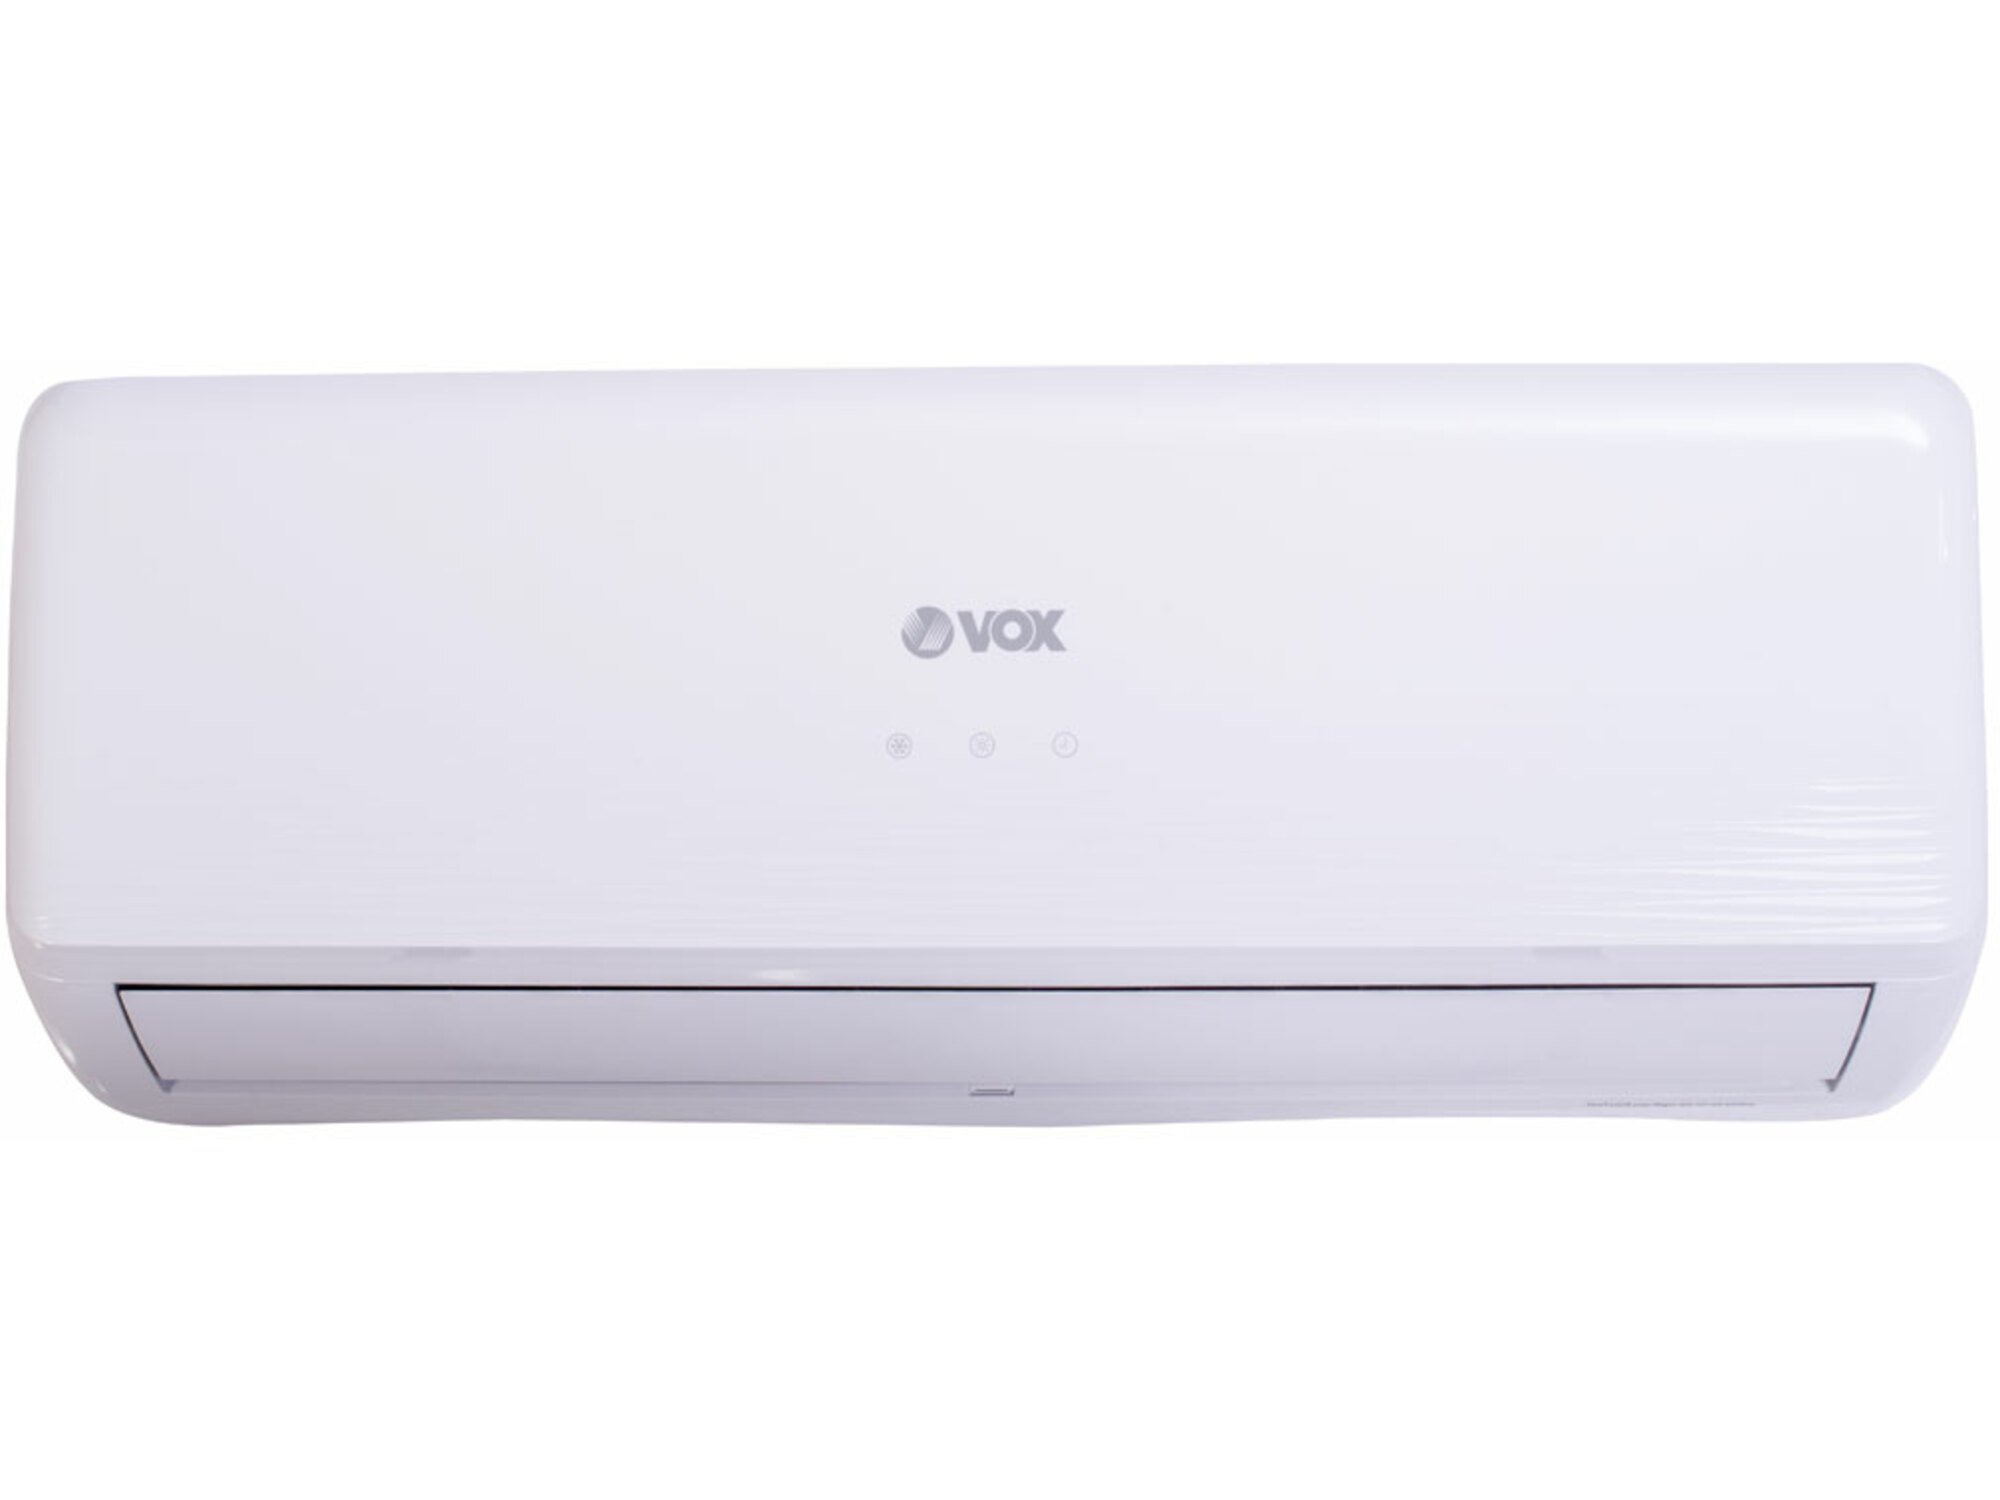 VOX Klima uređaj VSA9 - 12BE